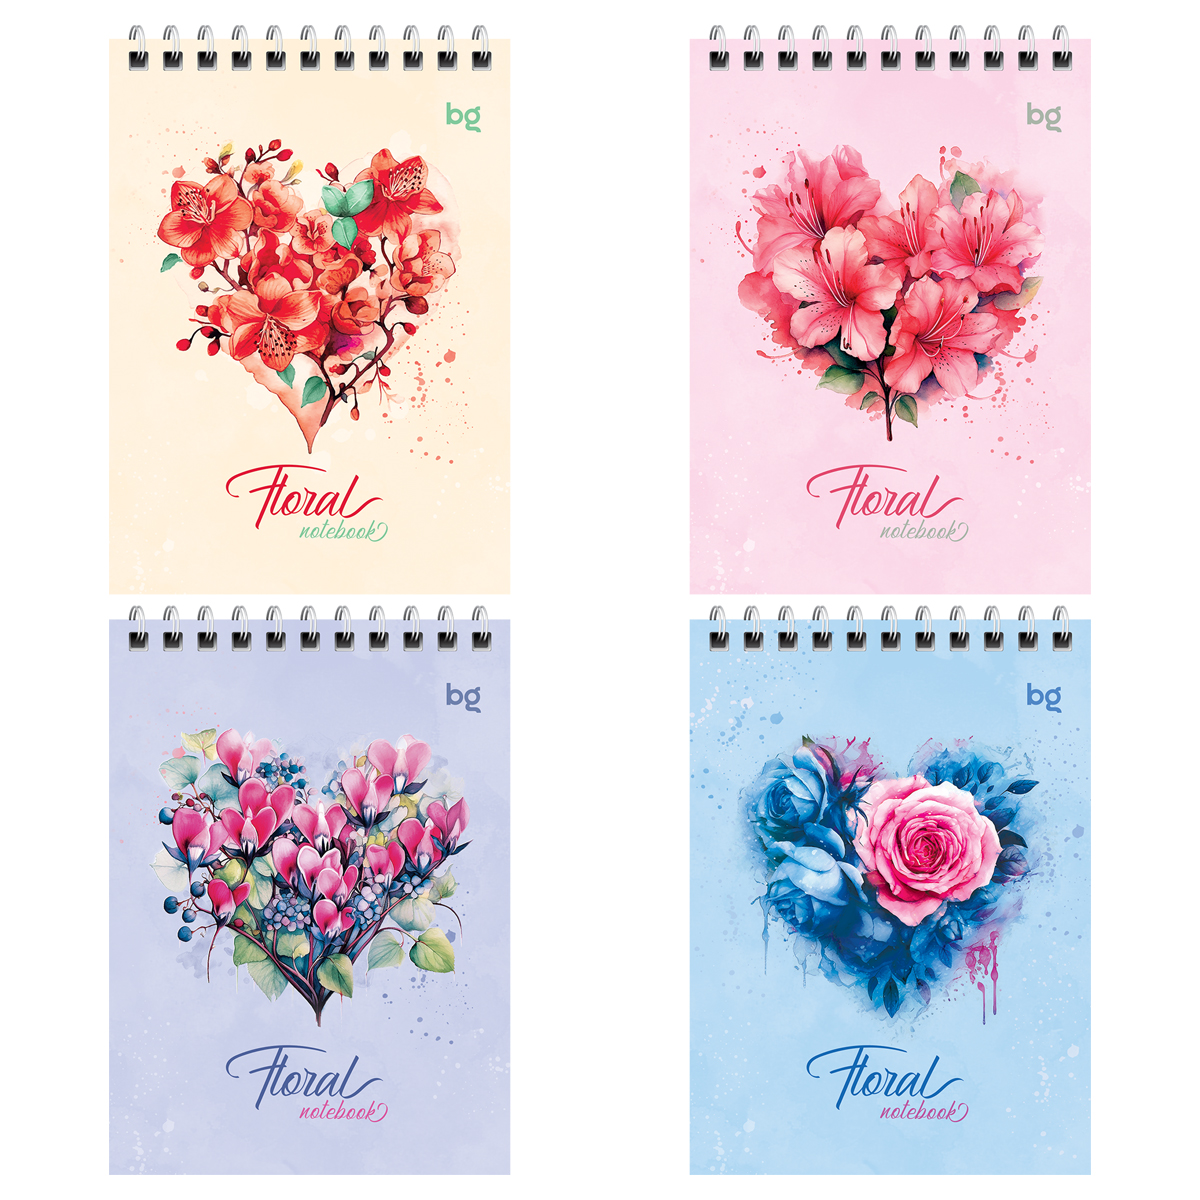  6 40.   BG "Floral notebook" 